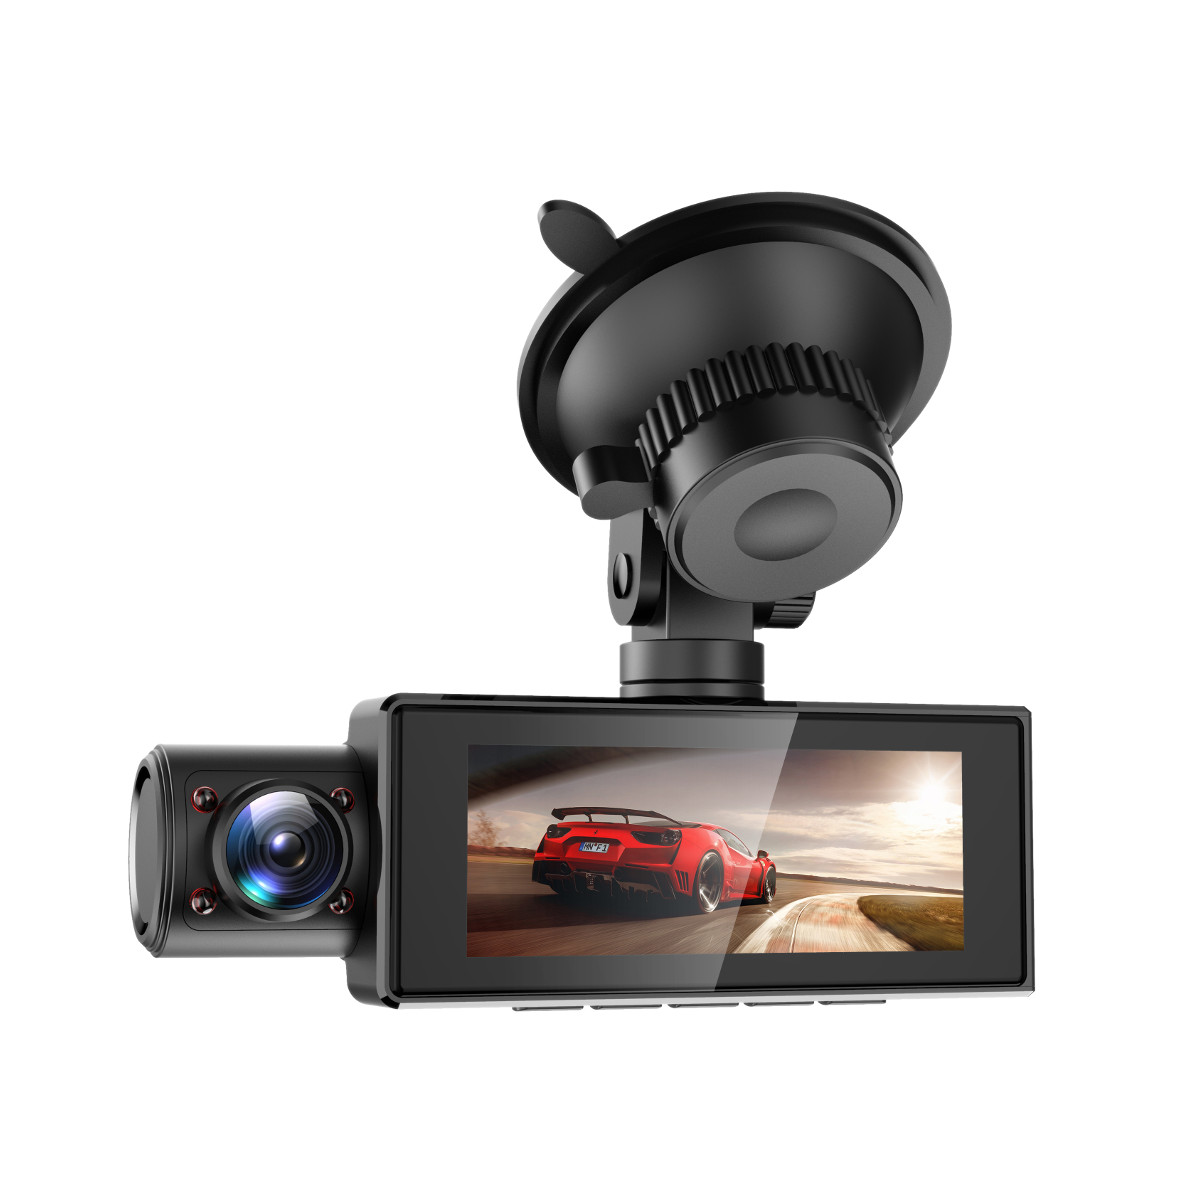 M6 Dual Lens Vehicle Blackbox DVR 1080P HD Night Vision Dash Cam Three Camera with GPS G-Sensor Parking Monitor Car Driving Recorder - Auto GoShop